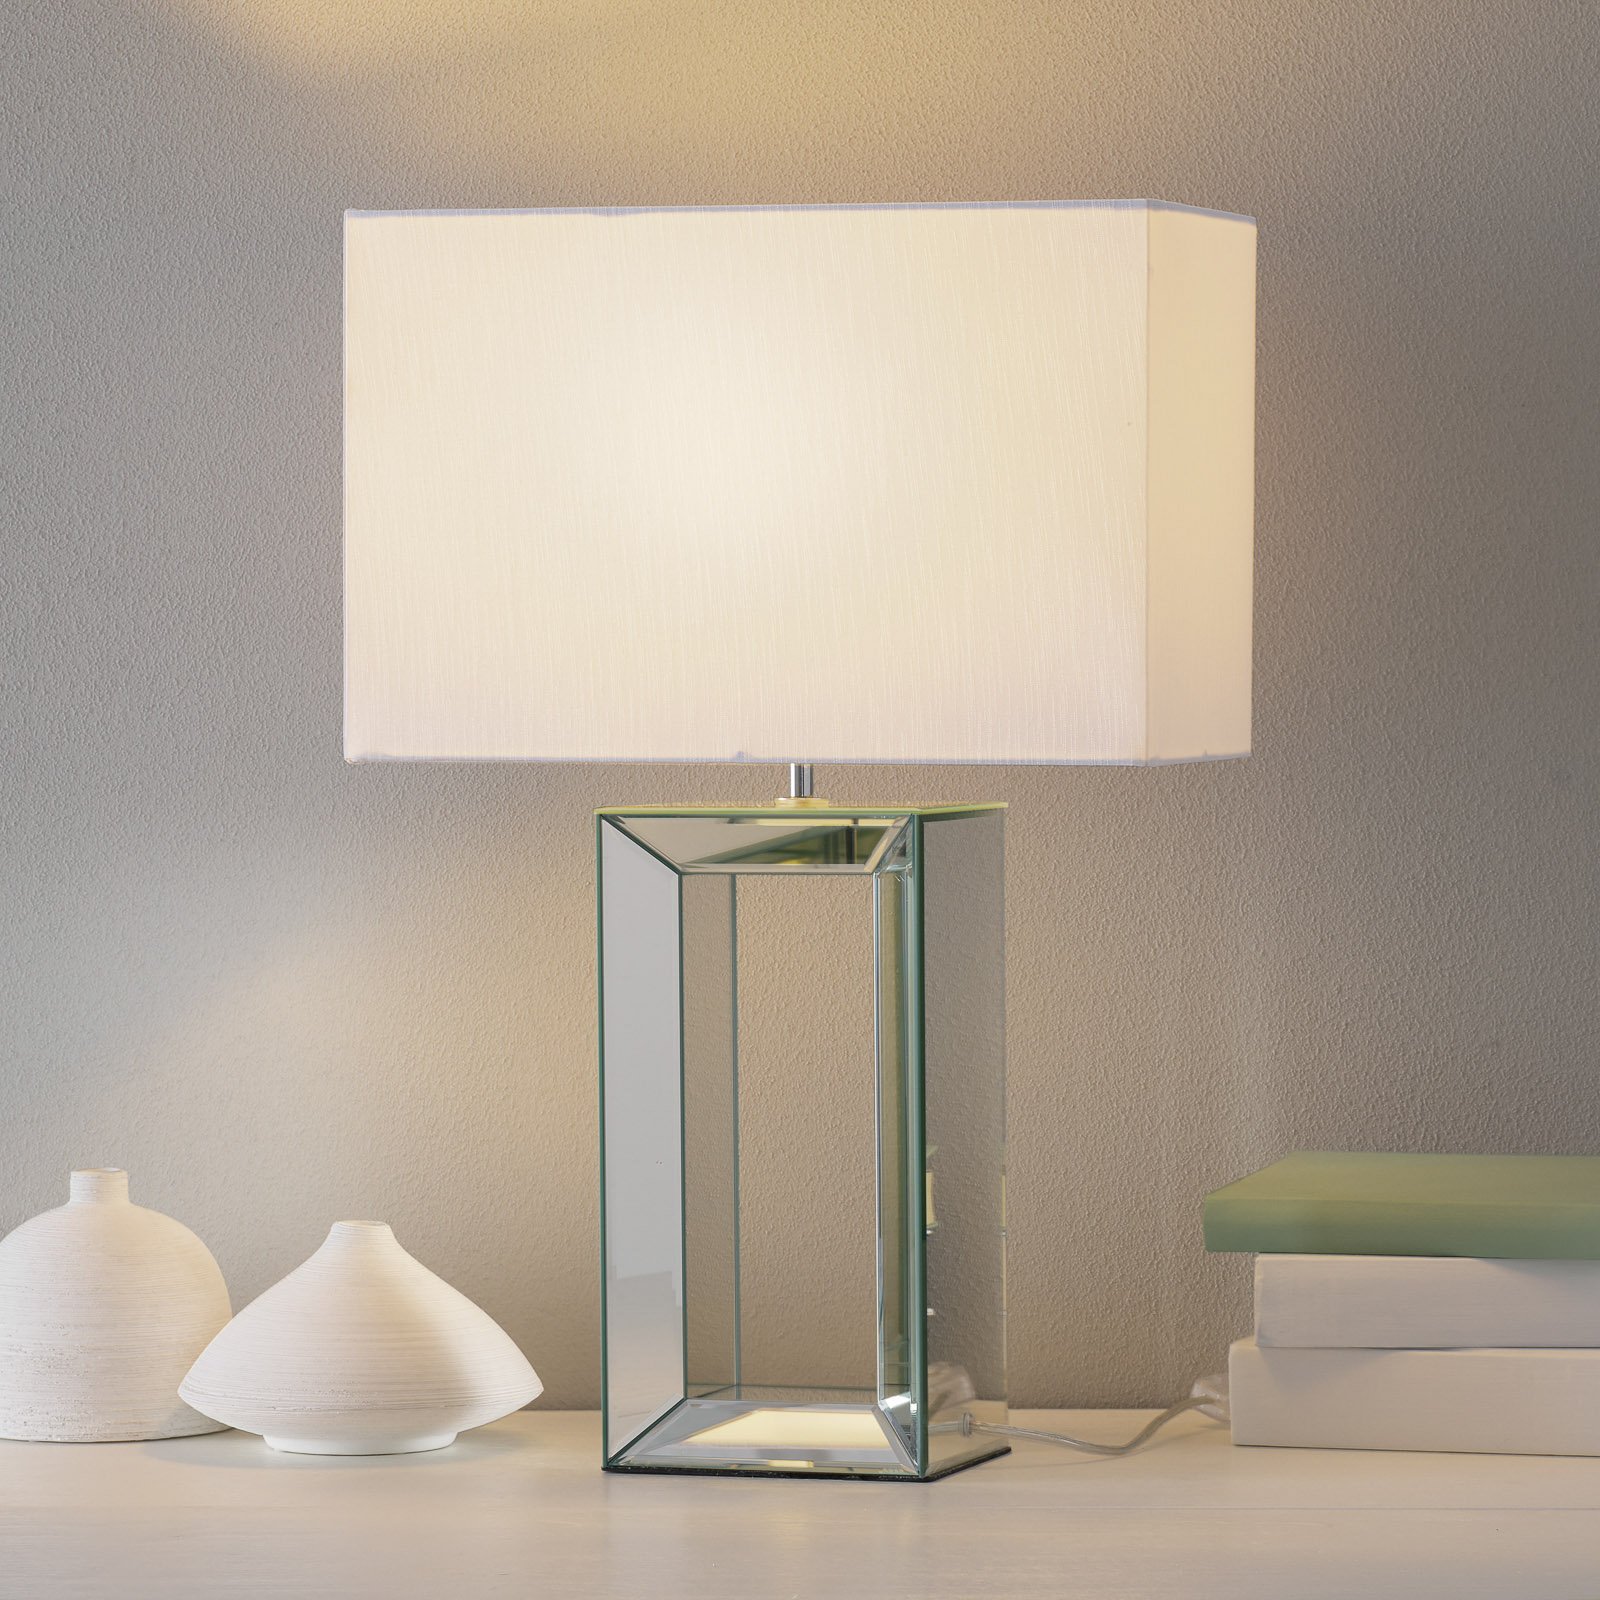 Elegant bordslampa Reflections, 58 cm